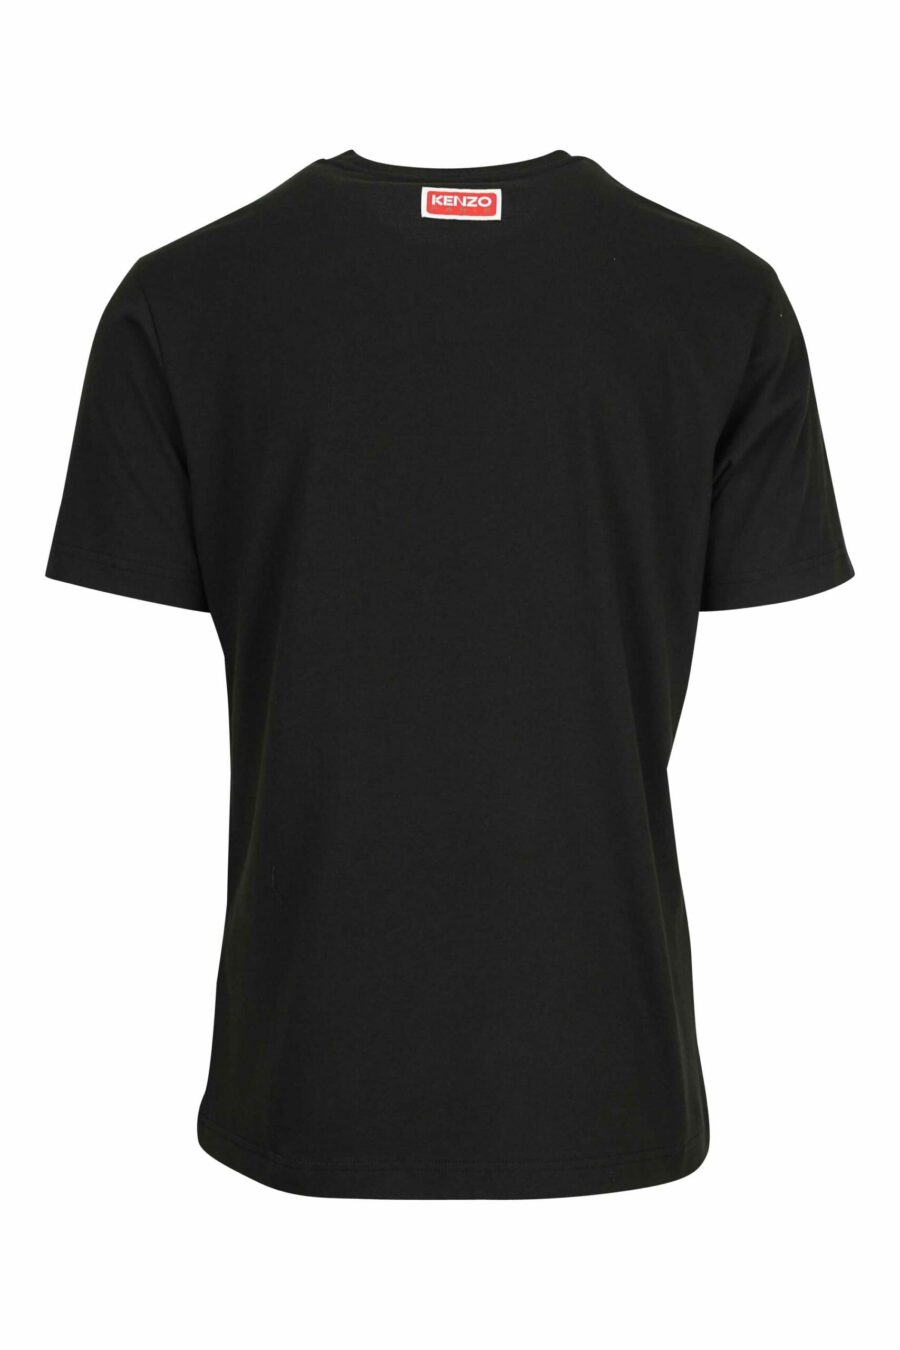 Schwarzes T-Shirt mit Mini-Logo "kenzo elephant" - 3612230625365 1 skaliert